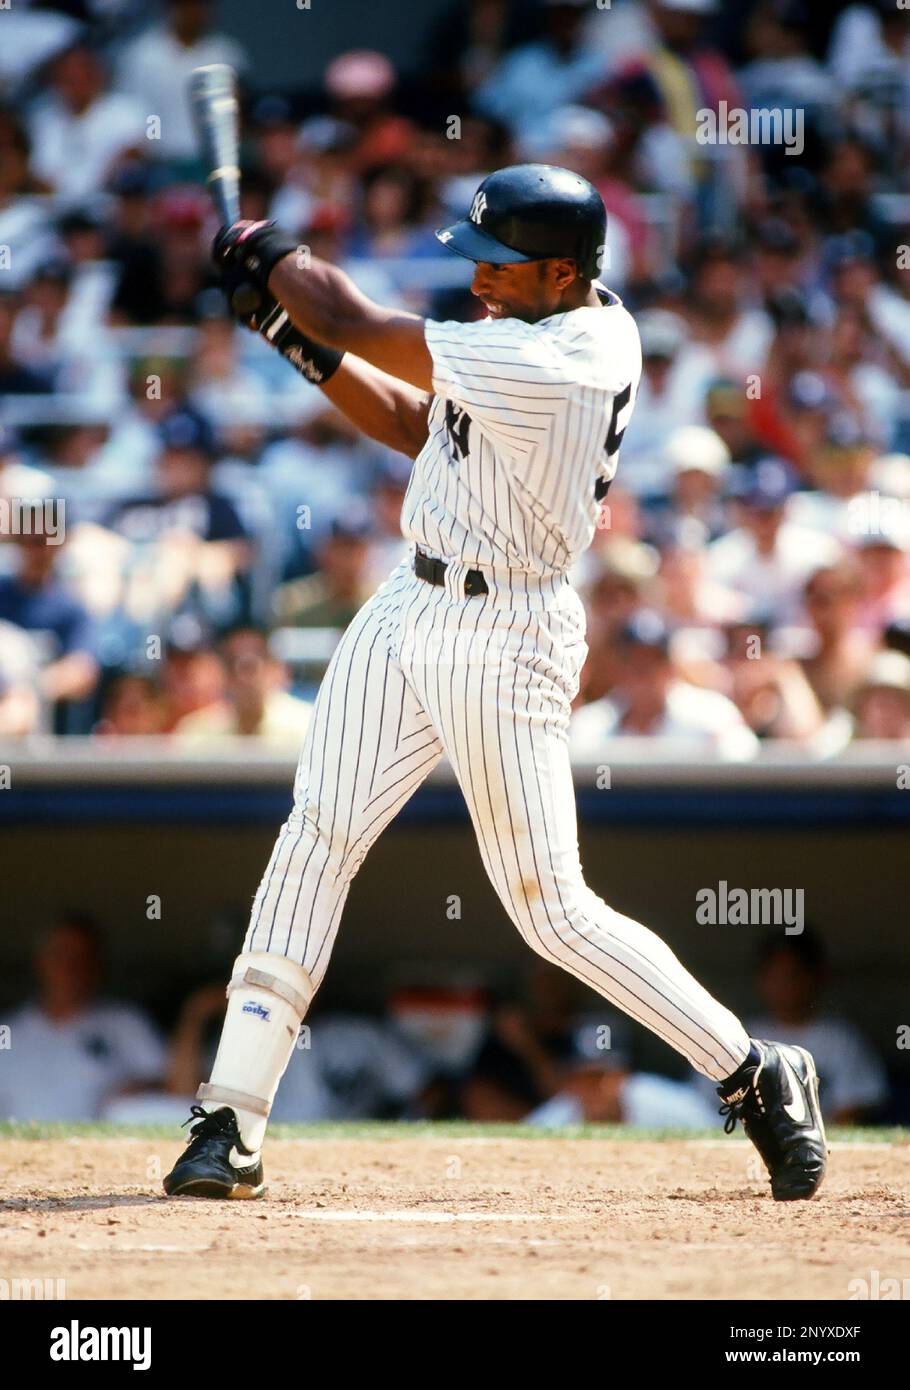 10 Jul. 1994: New York Yankees outfielder Bernie Williams (51